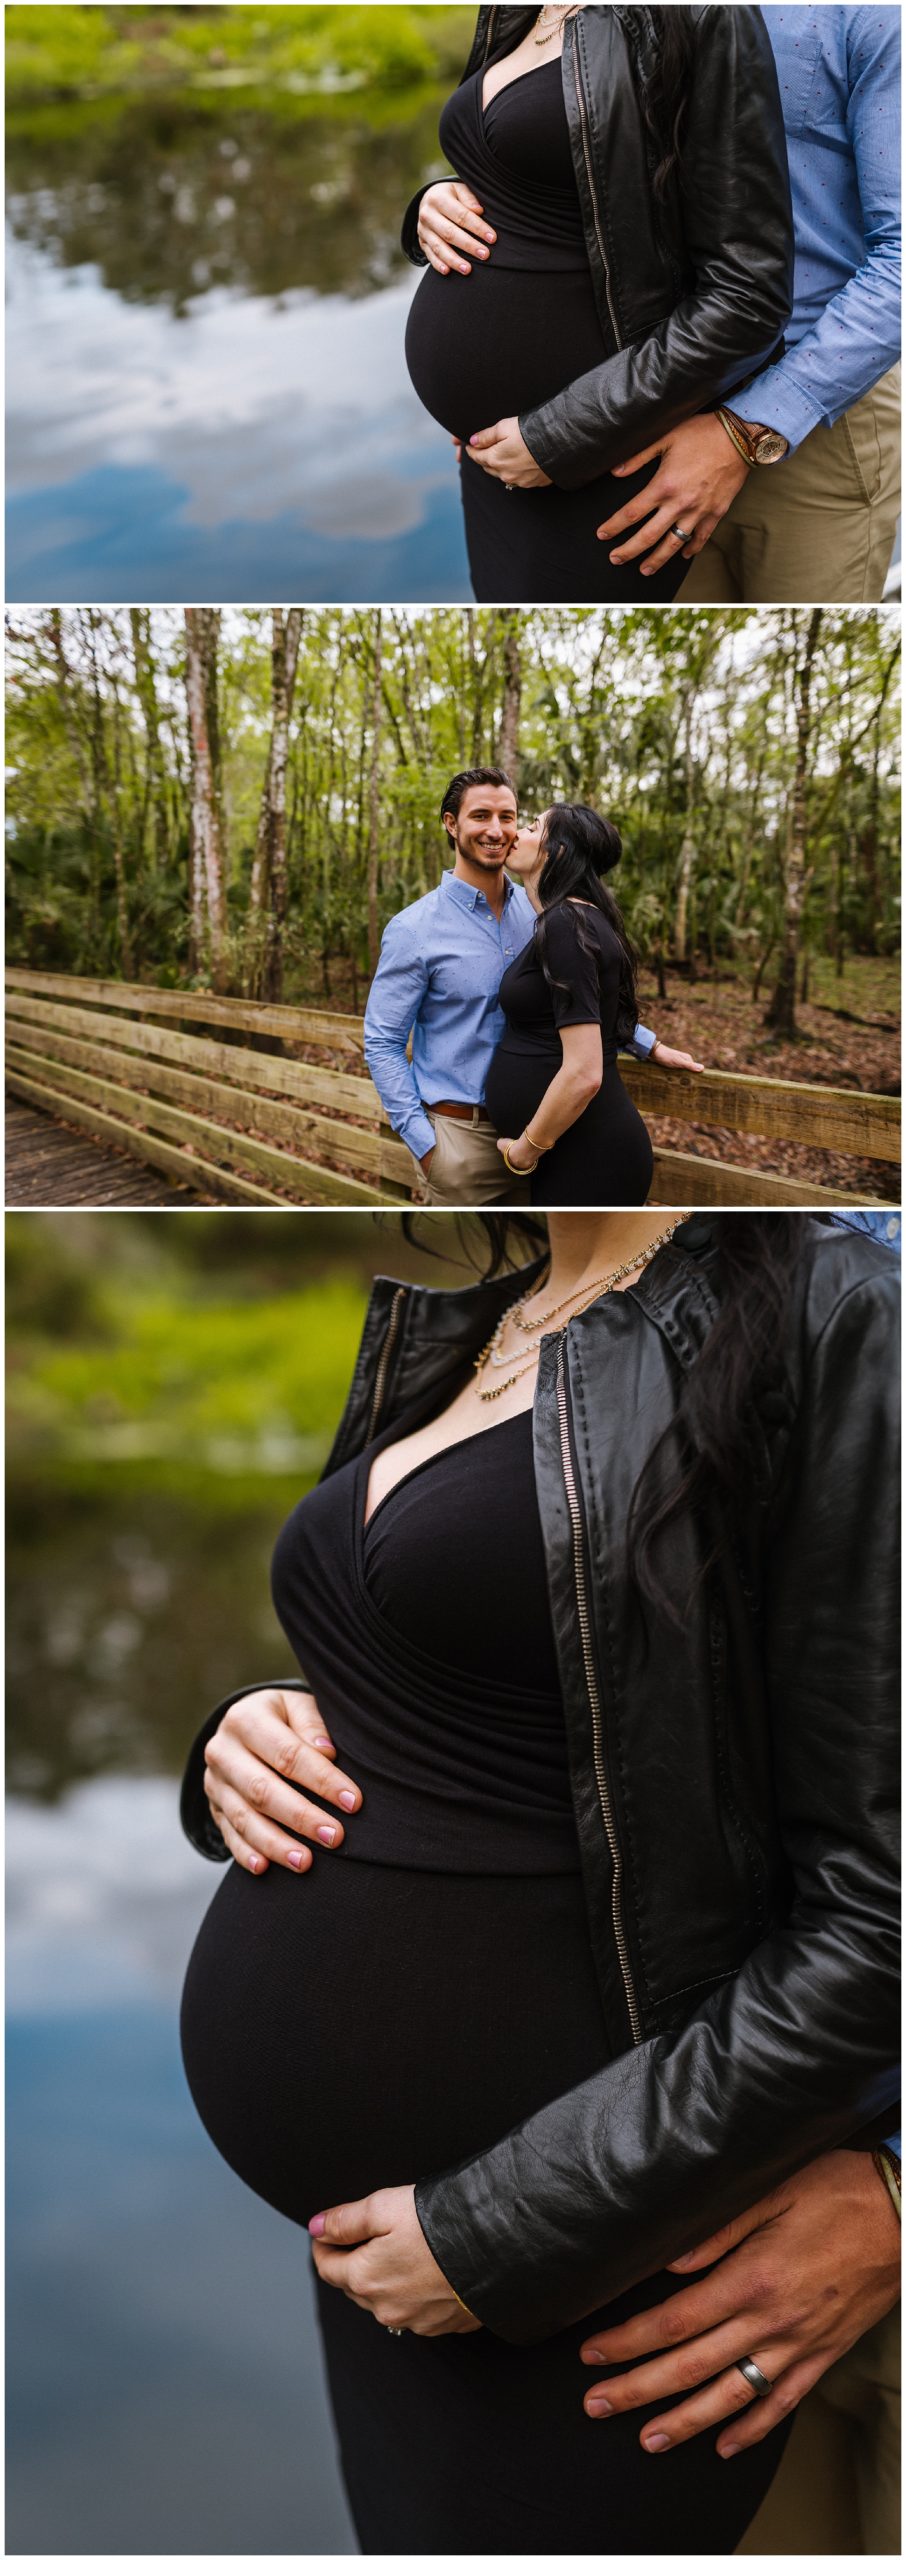 Tampa-maternity-photographer-morris-bridge-park-hip-tight-black-dress-woods_0008.jpg